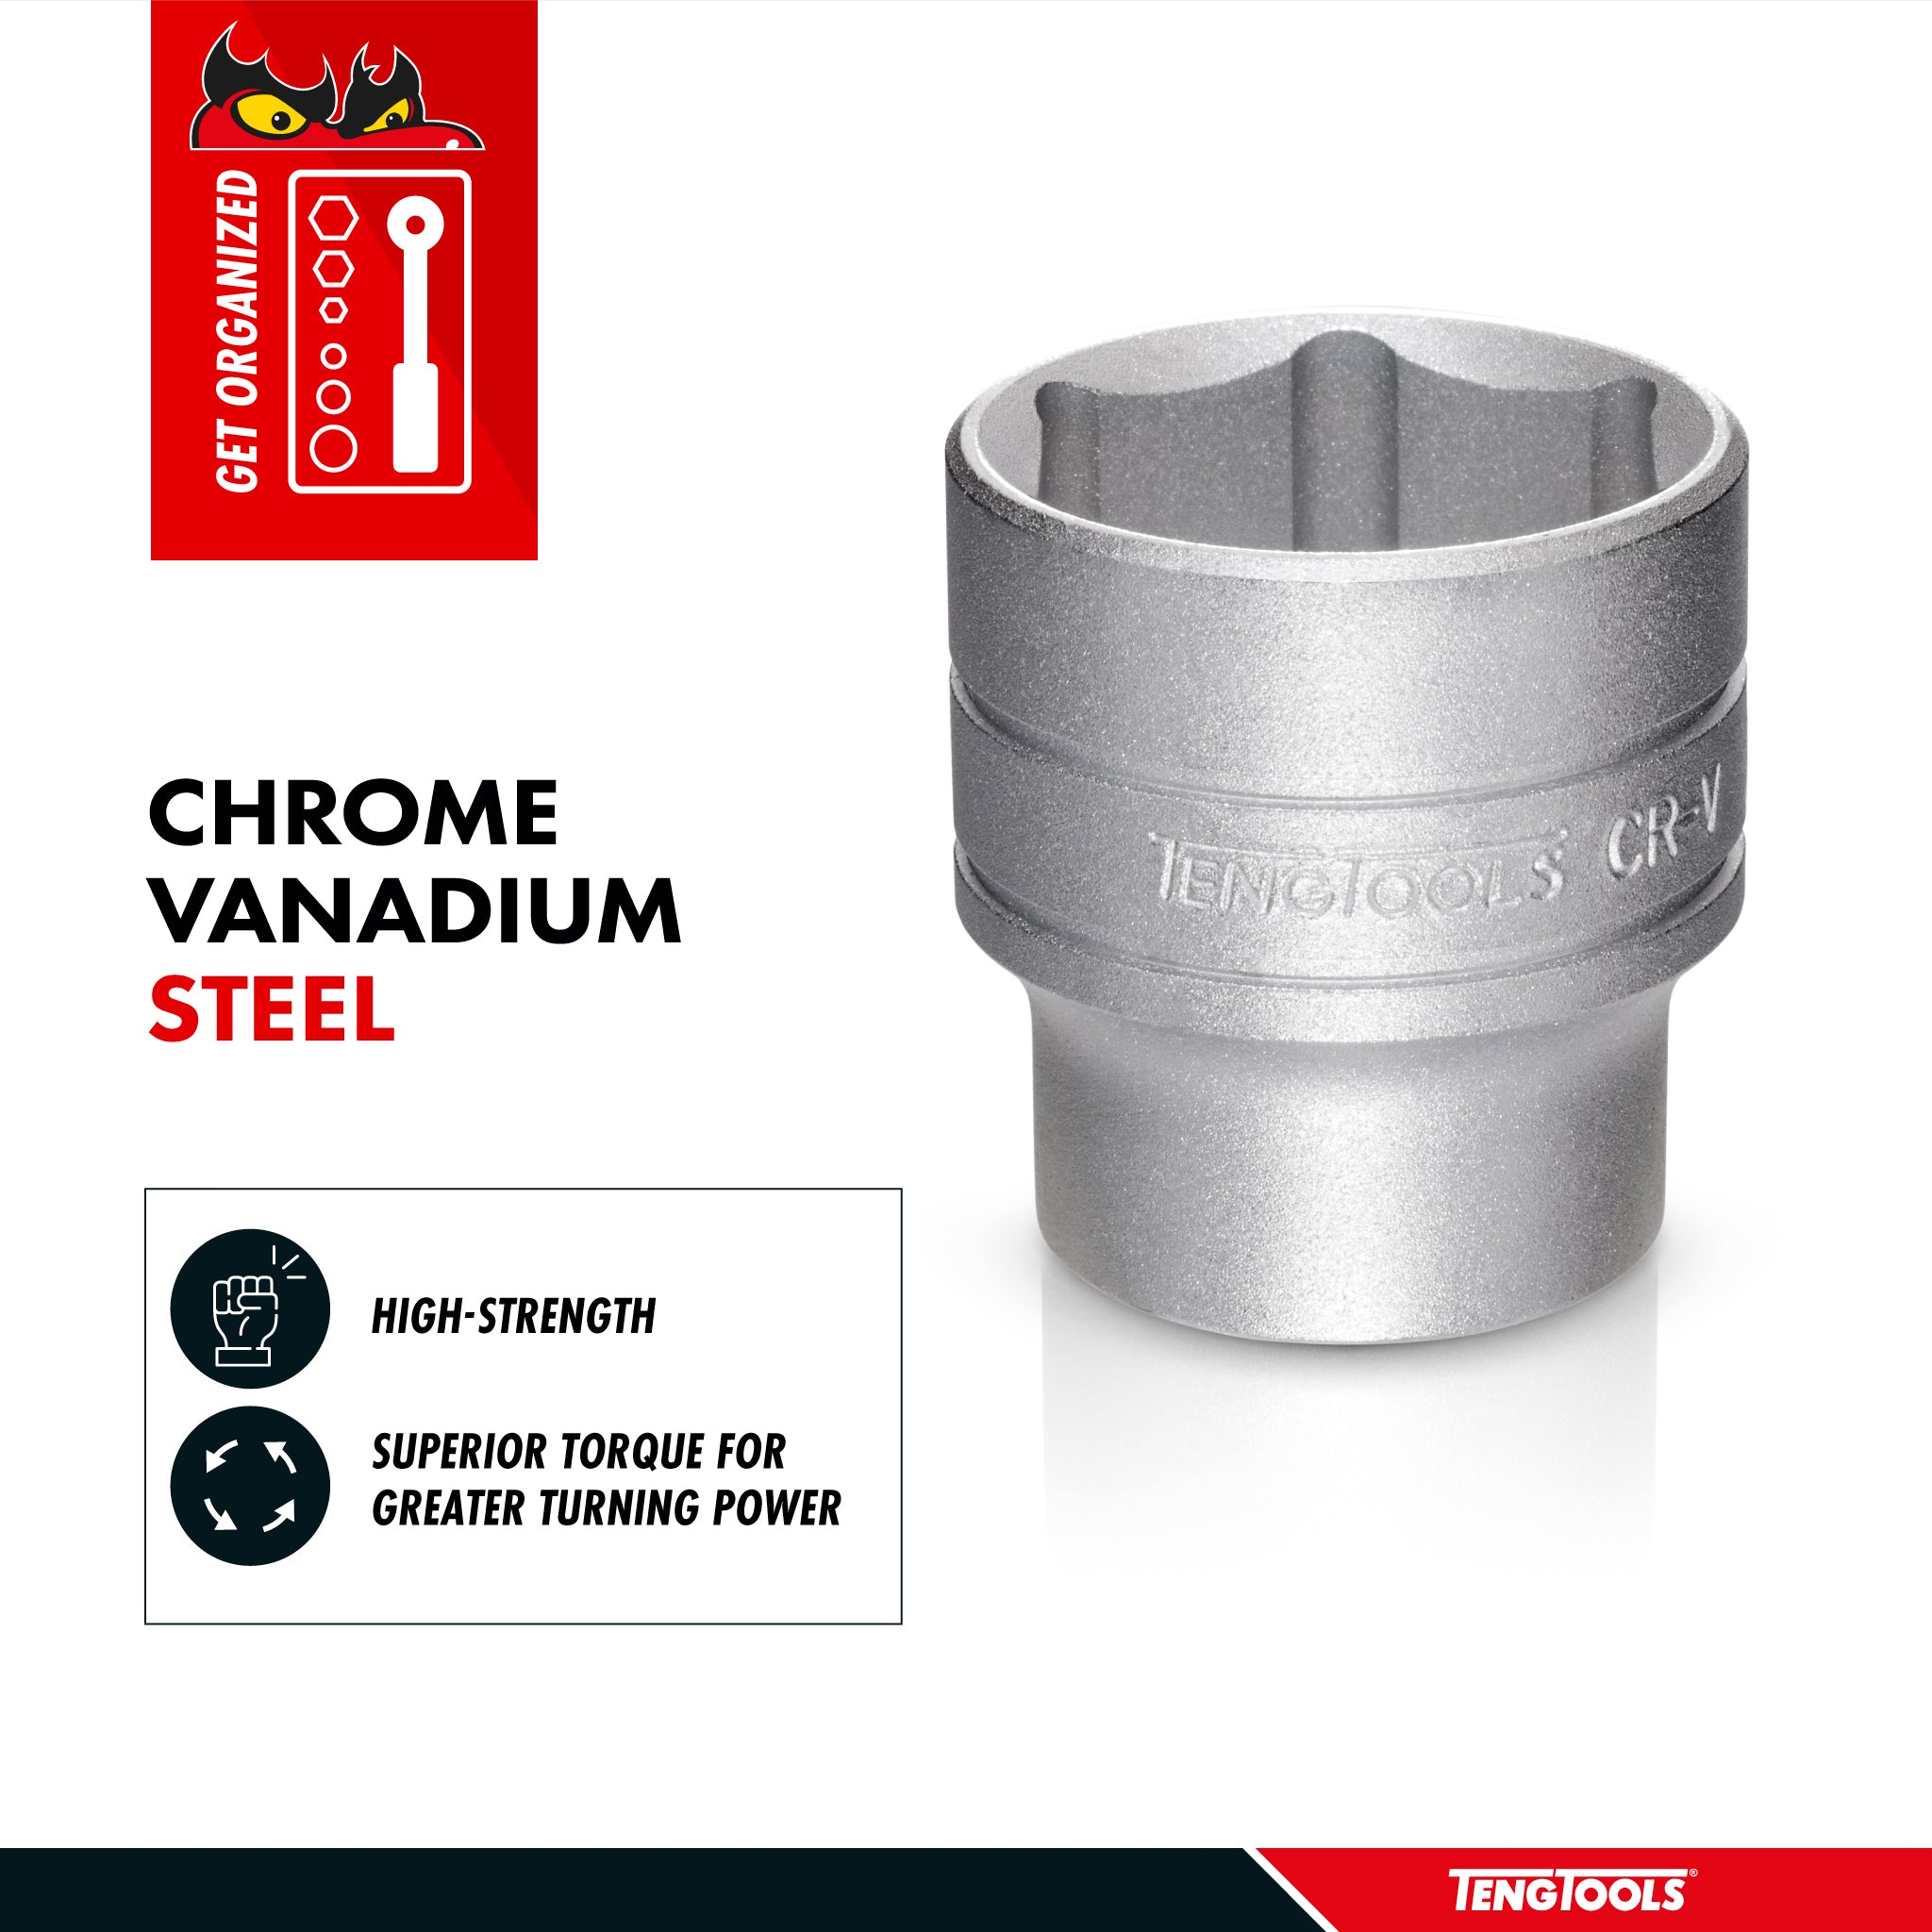 Teng Tools 1/2 Inch Drive 6 Point Metric Shallow Chrome Vanadium Sockets - 12mm